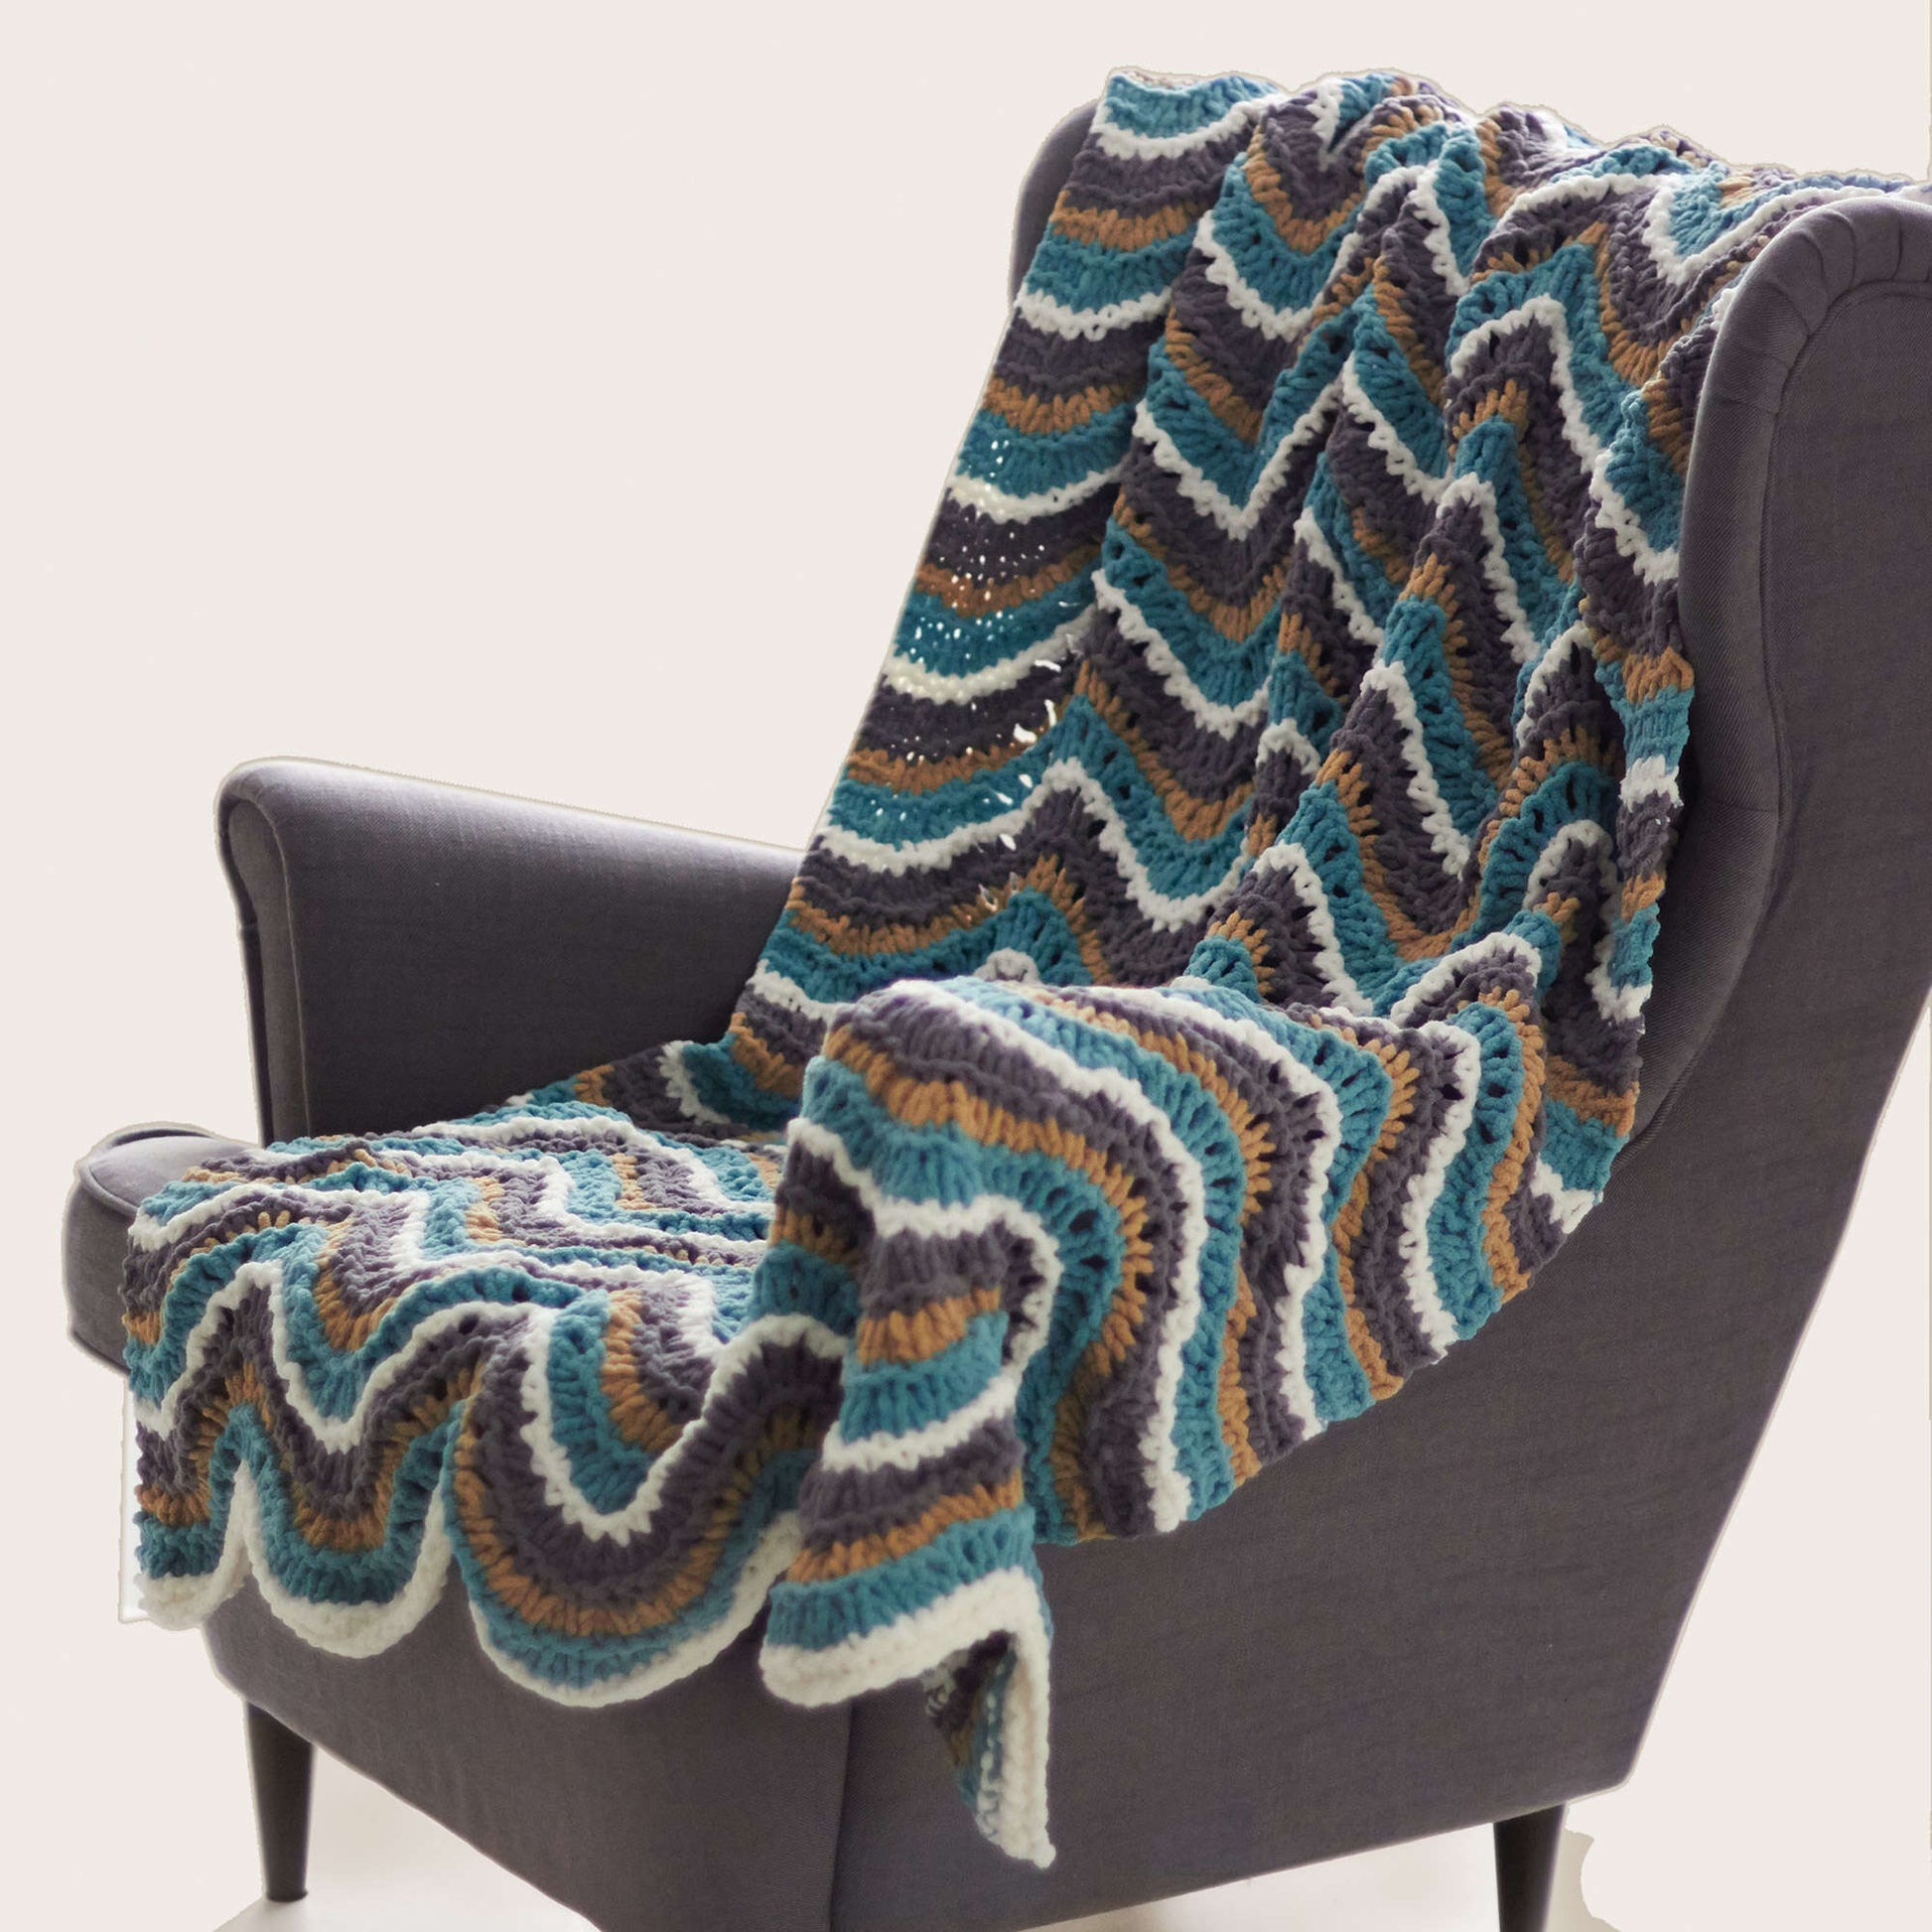 Free Bernat Ripple Knit Blanket Pattern